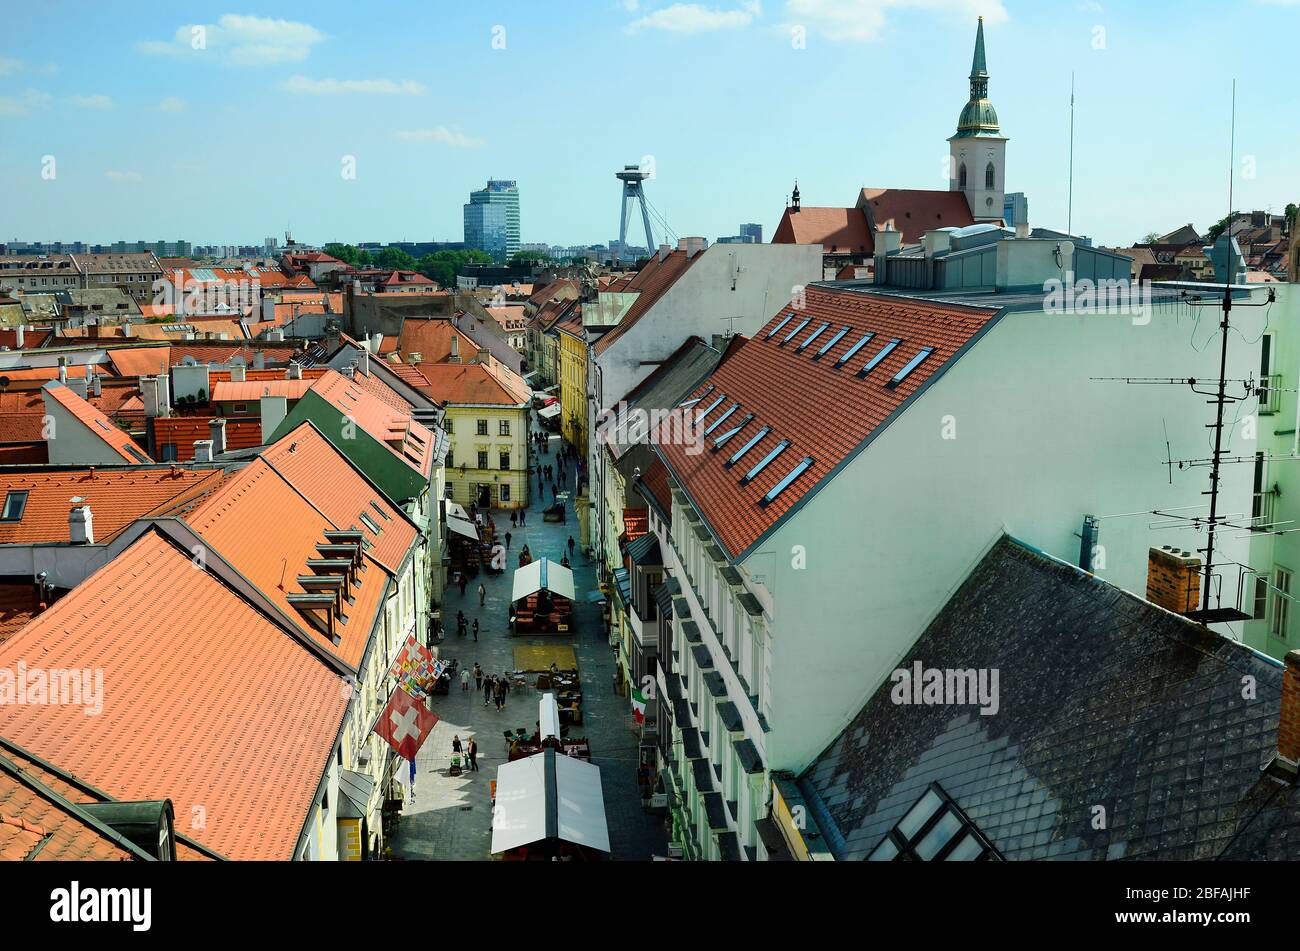 Slovakia, Bratislava - May 28th 2015: Unidentified people, restaurants and buildings in Michalska street and the landmarks bridge novy most and martin Stock Photo